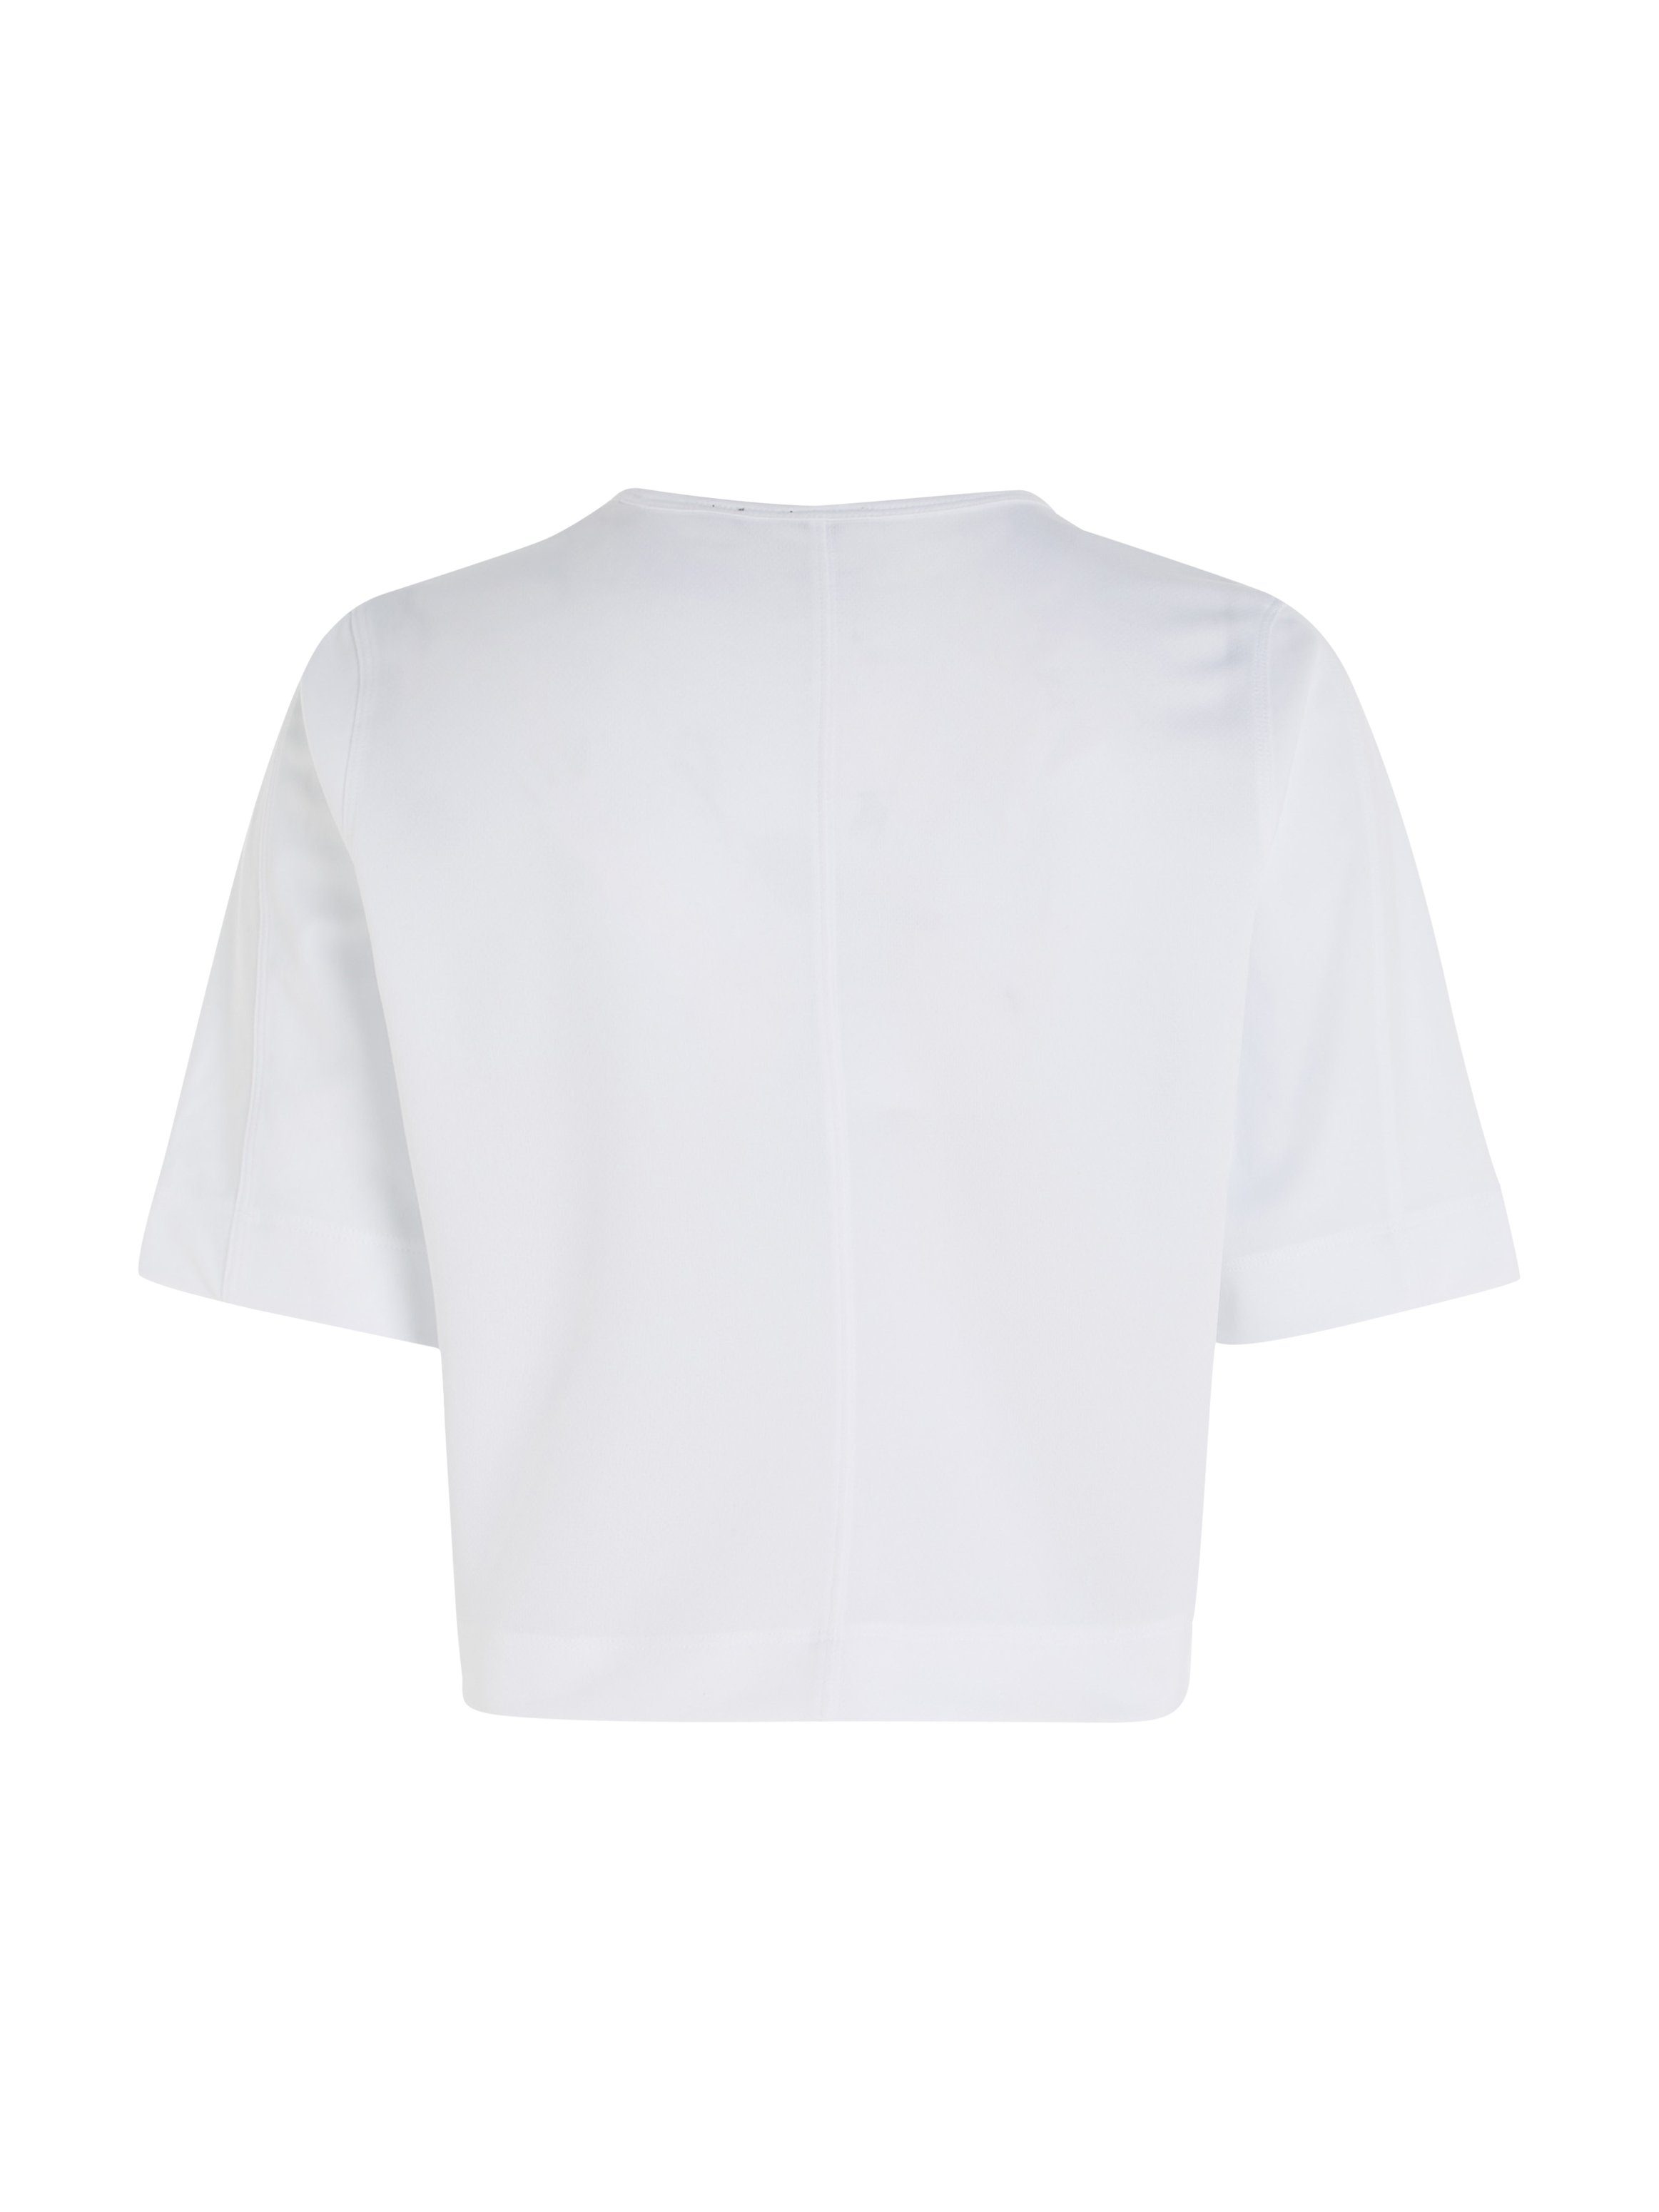 Klein Sport Calvin White T-Shirt Bright